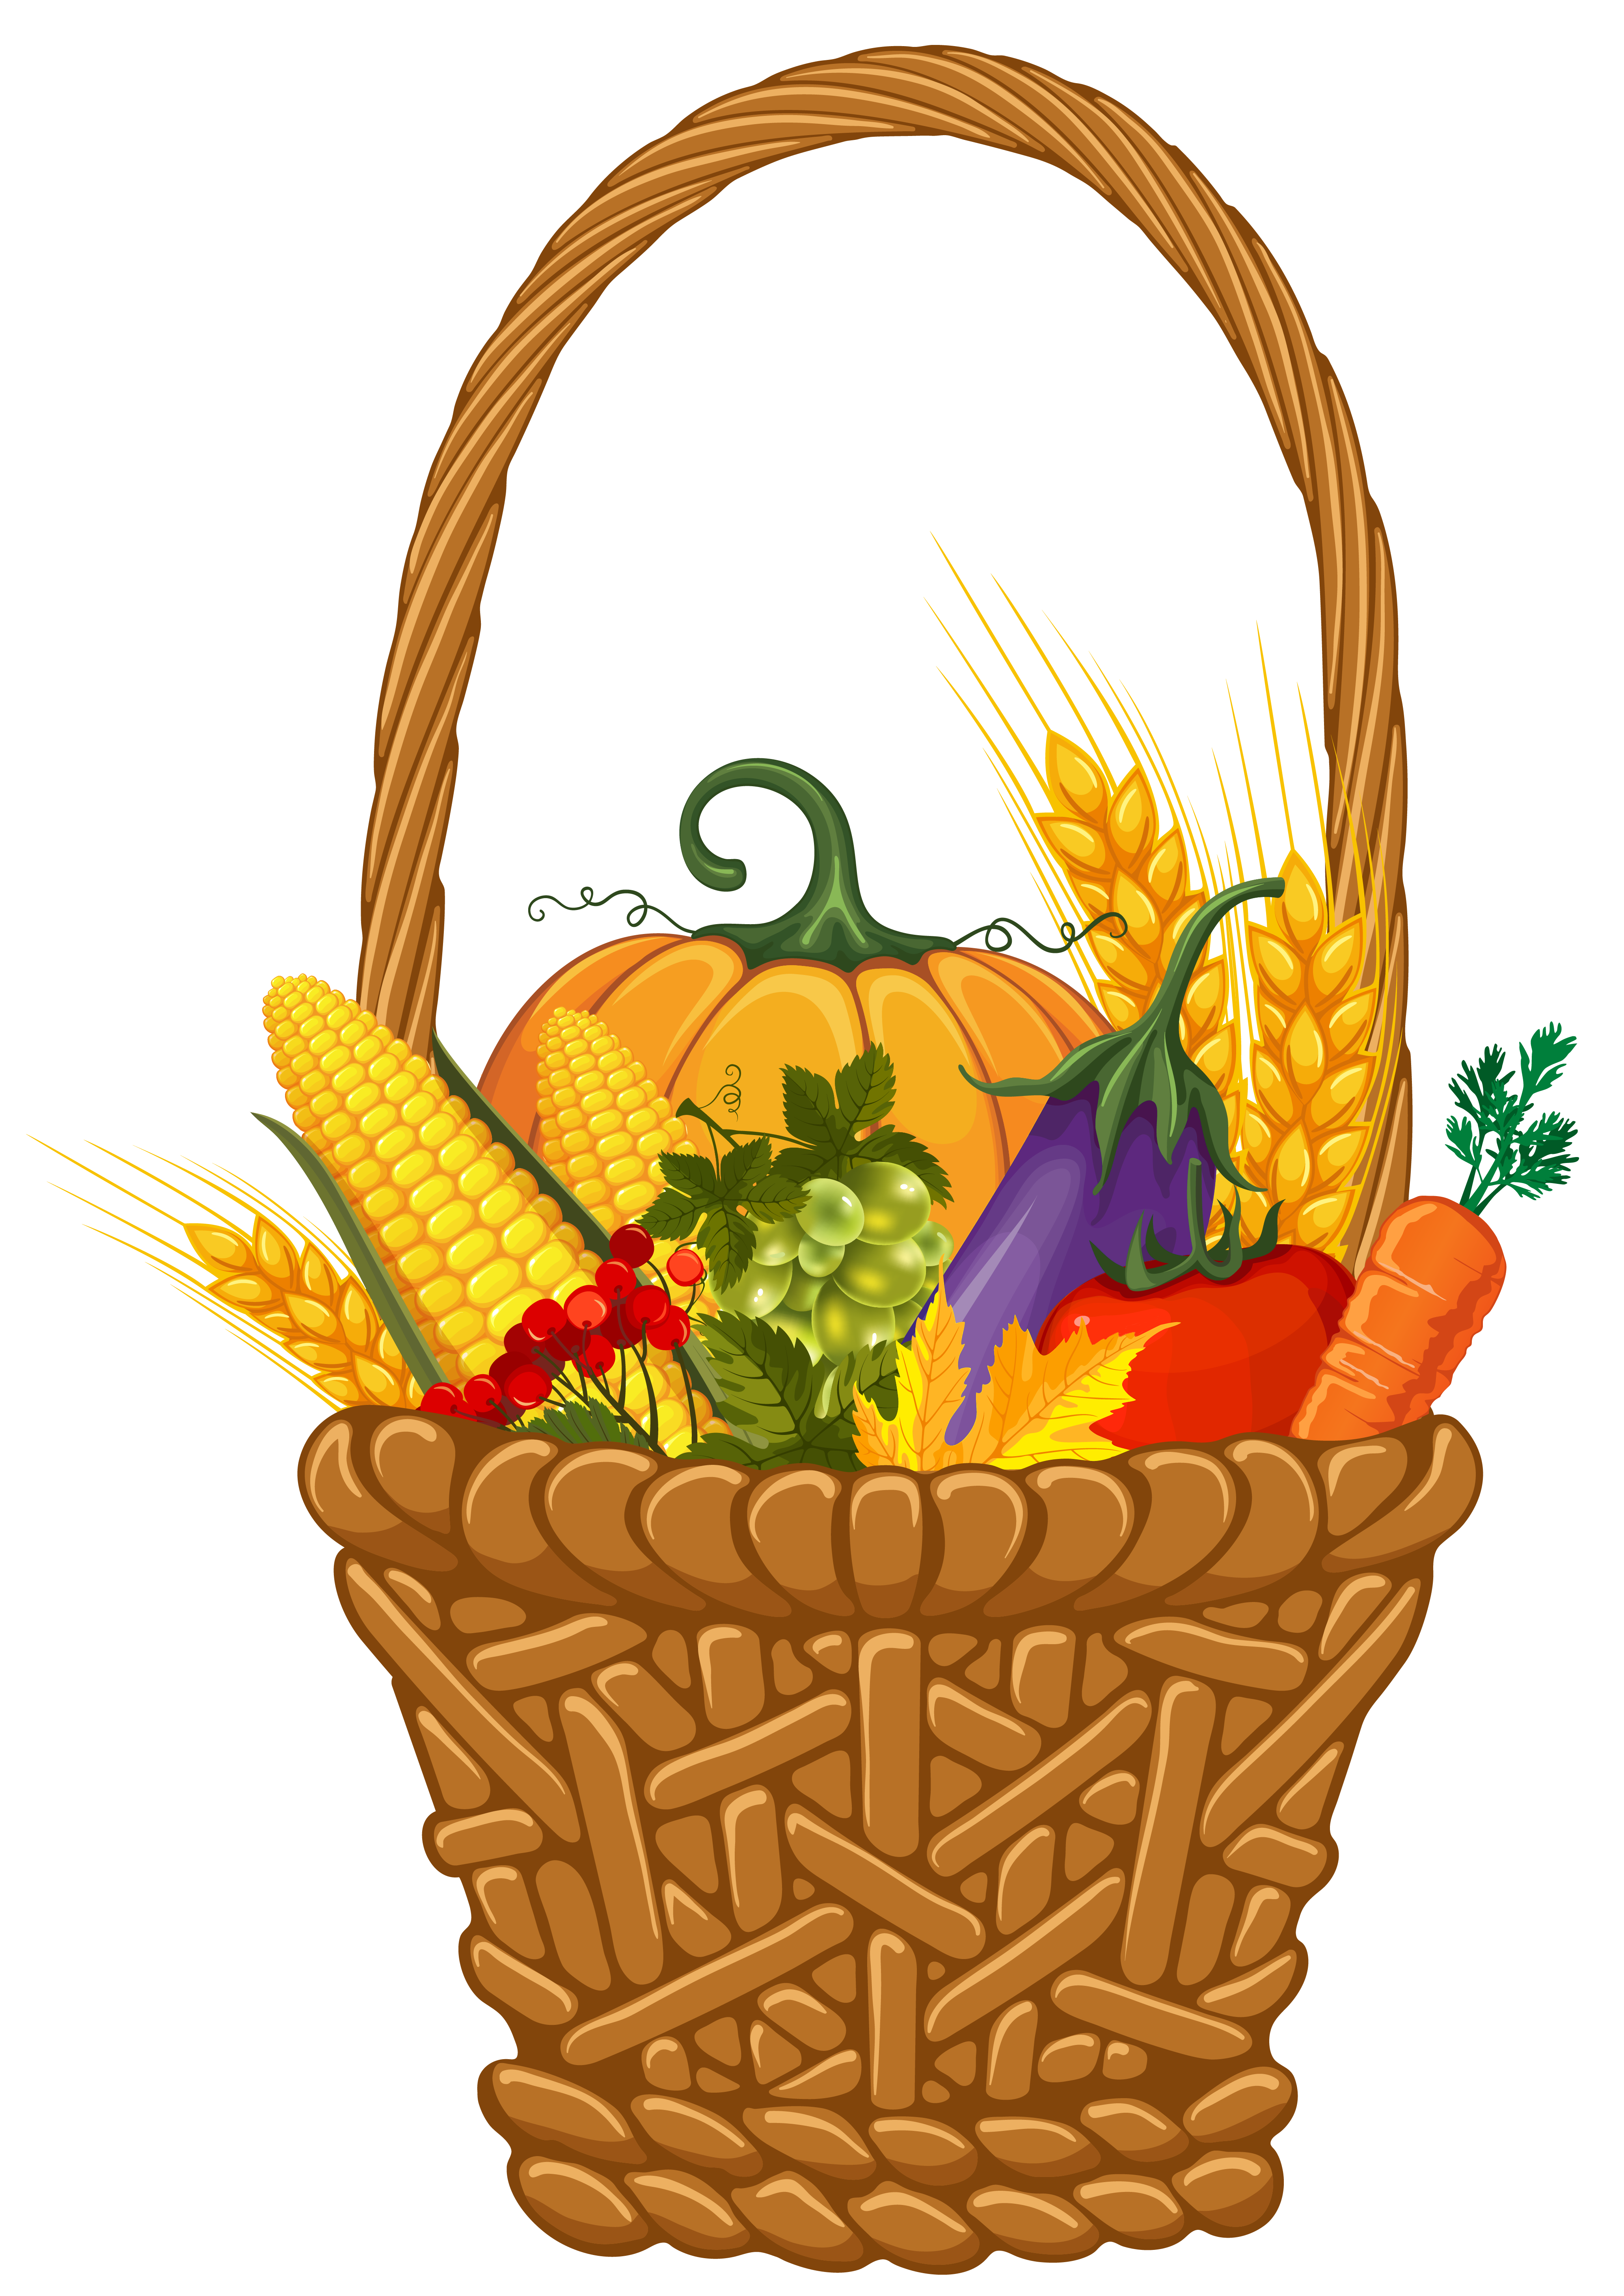 Fall Harvest Basket PNG Clipart Image.